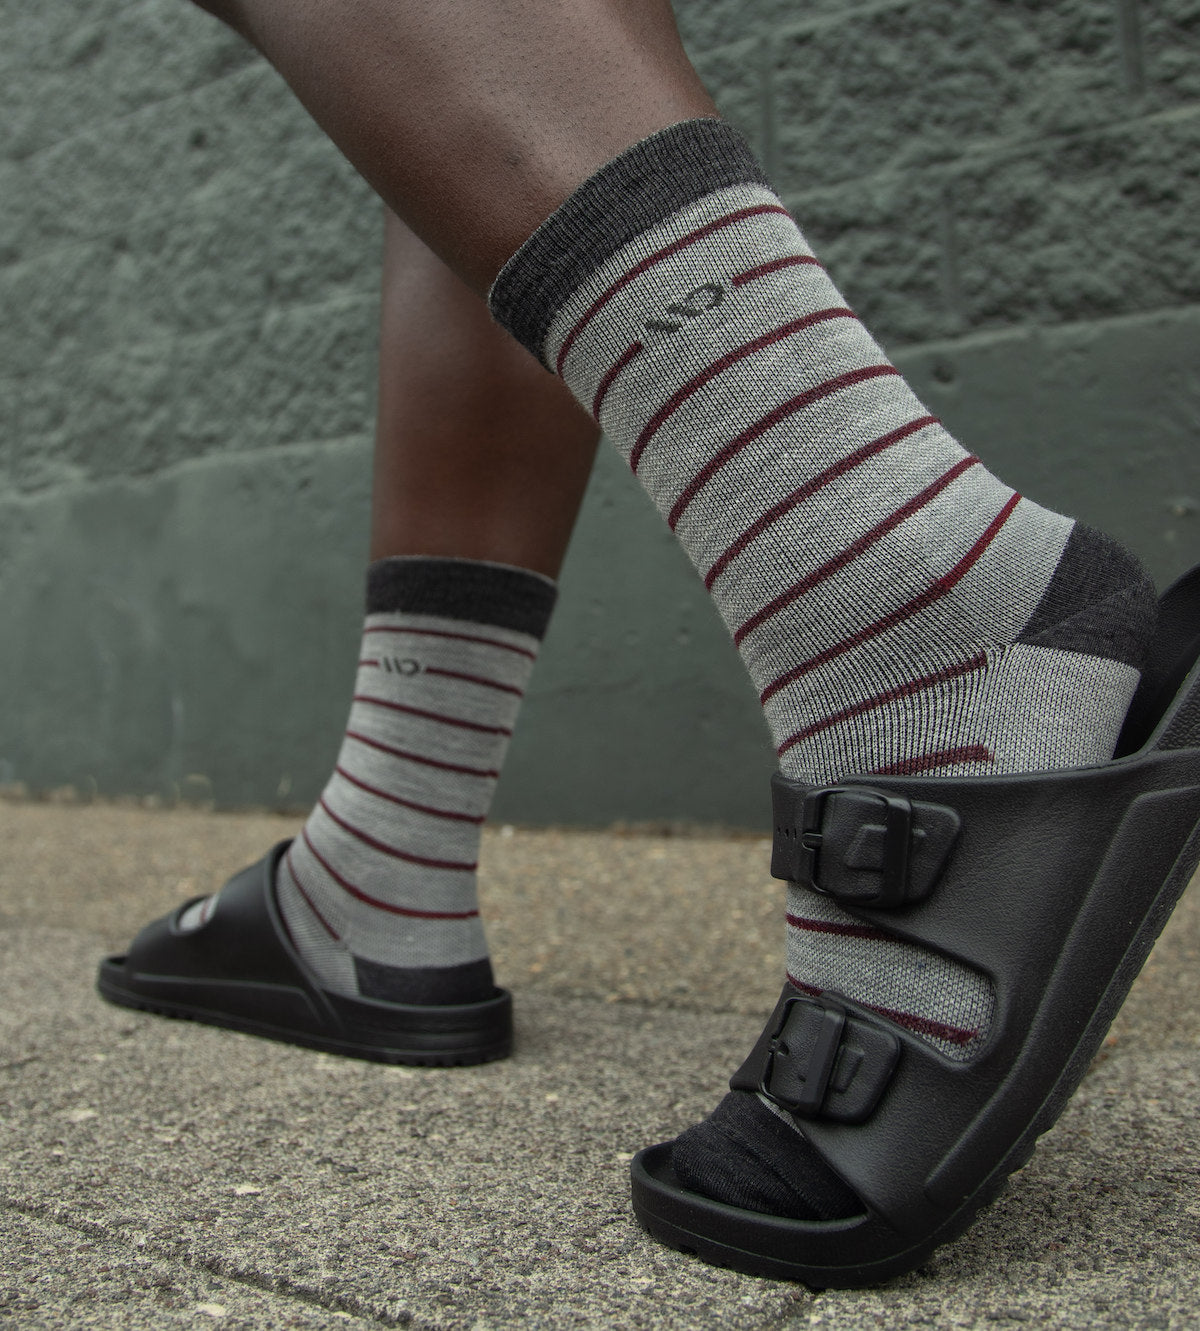 Feet walking outside in Men's Lightweight Horizontal Pinstripe Crew Socks and black sandals.